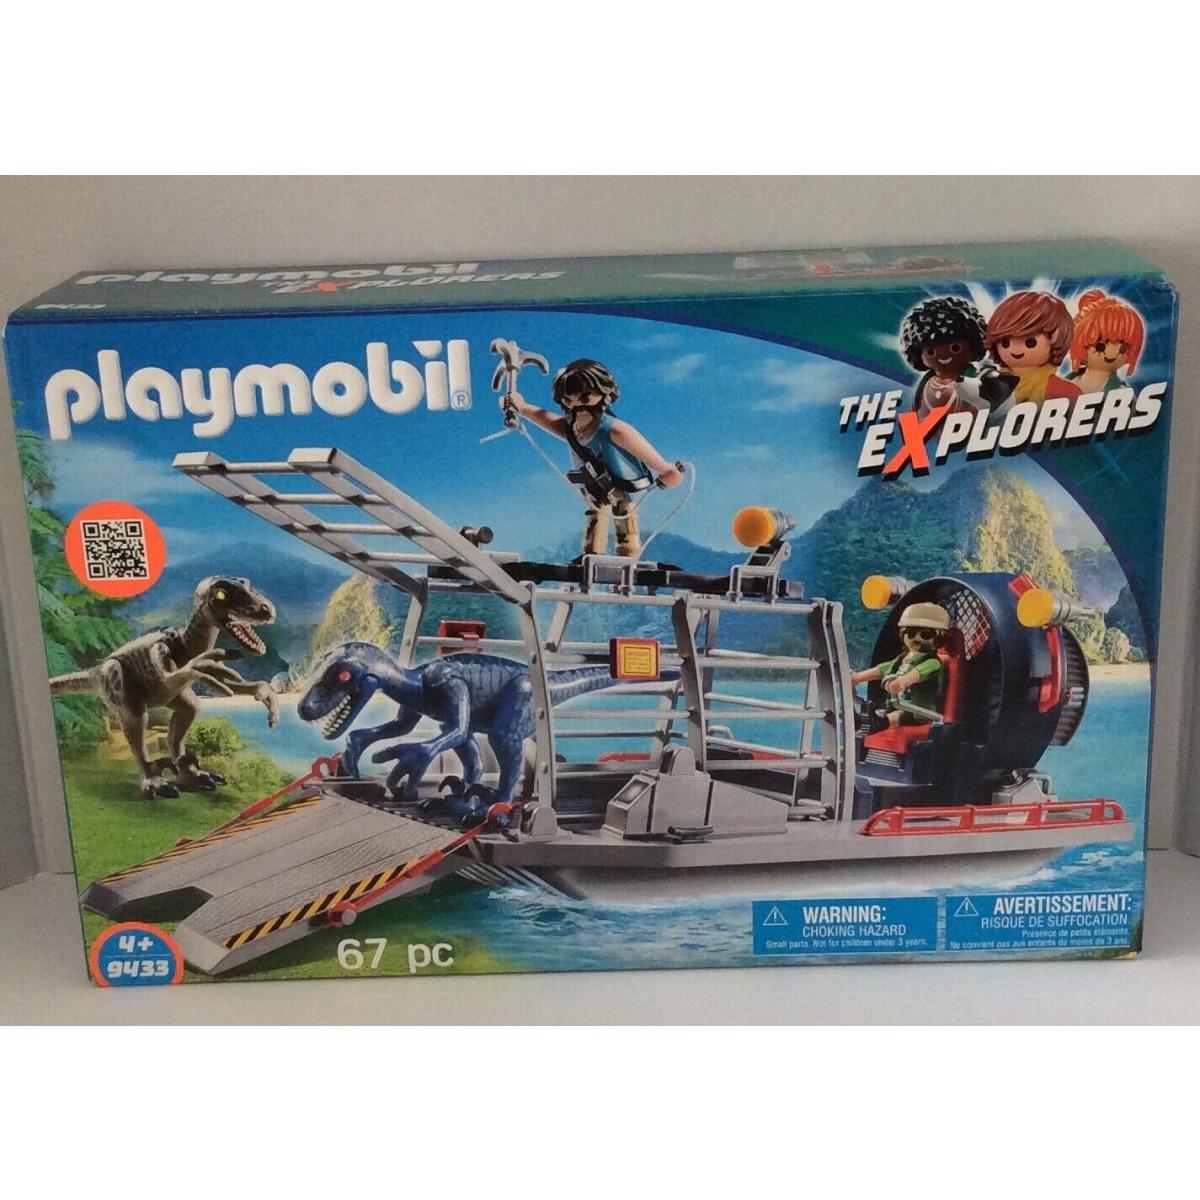 Playmobil The Explores 9433 Playmobile 67 Pc. Set